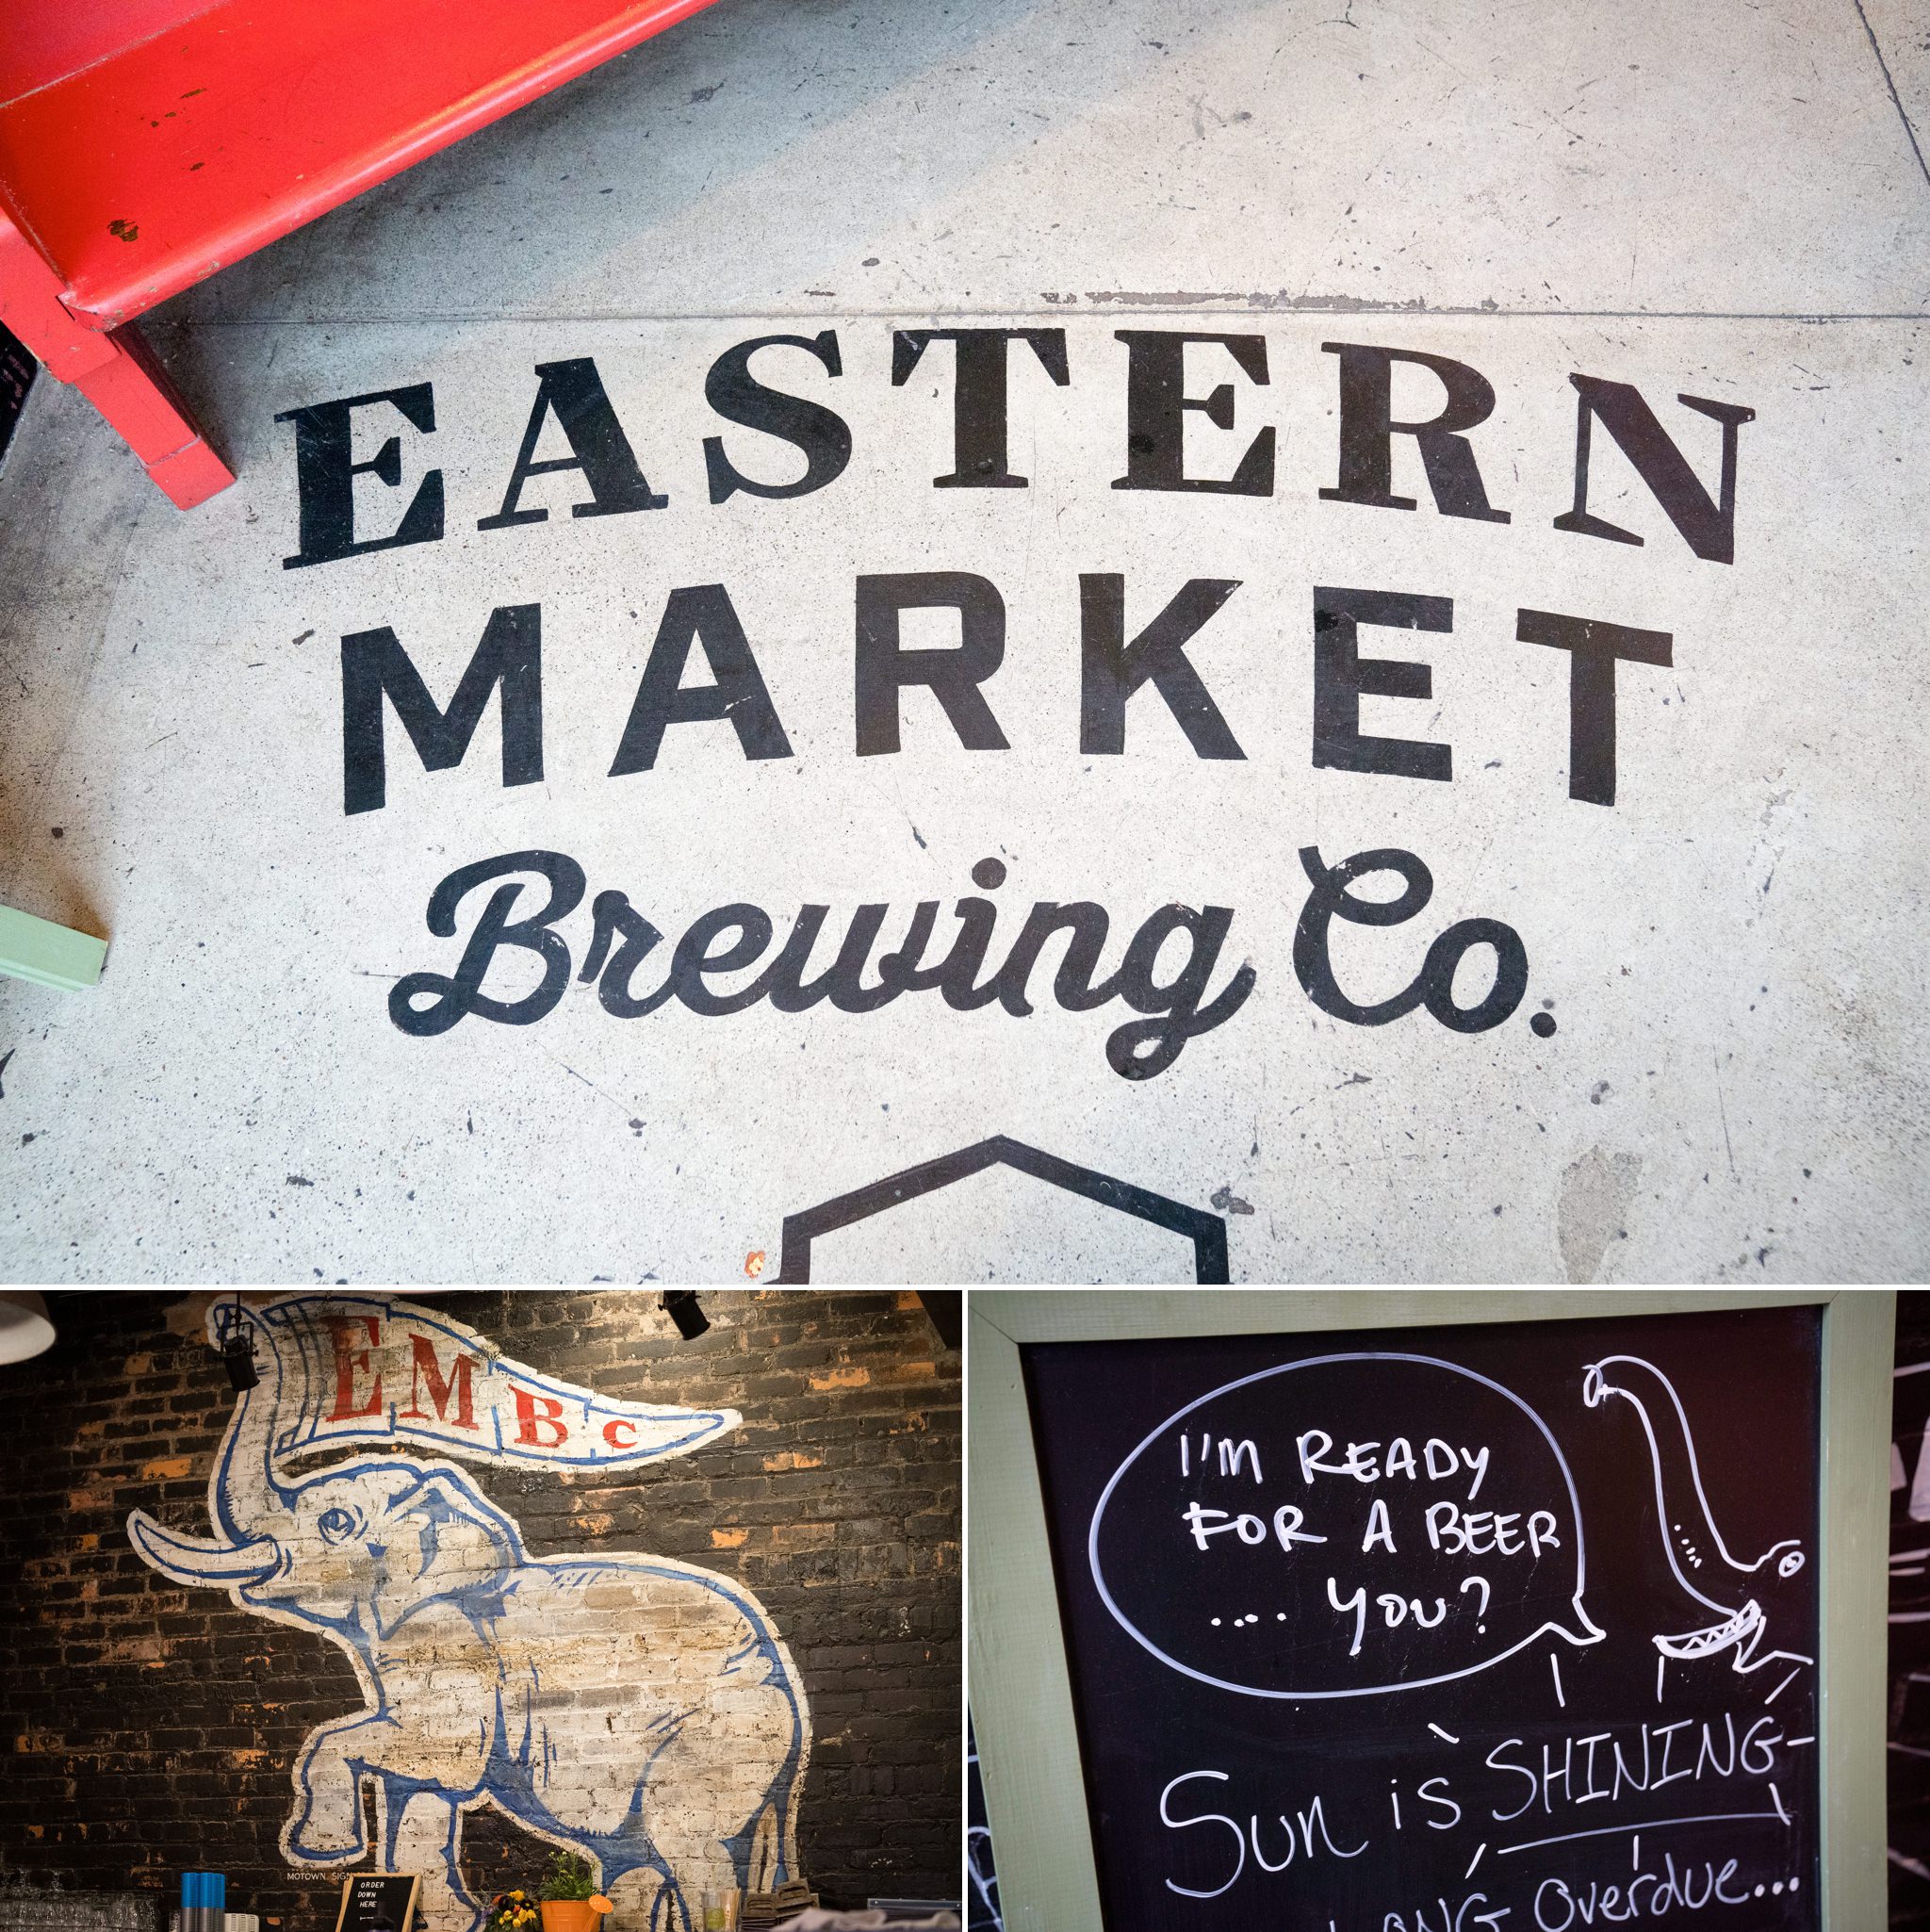 Eastern Market Brewery